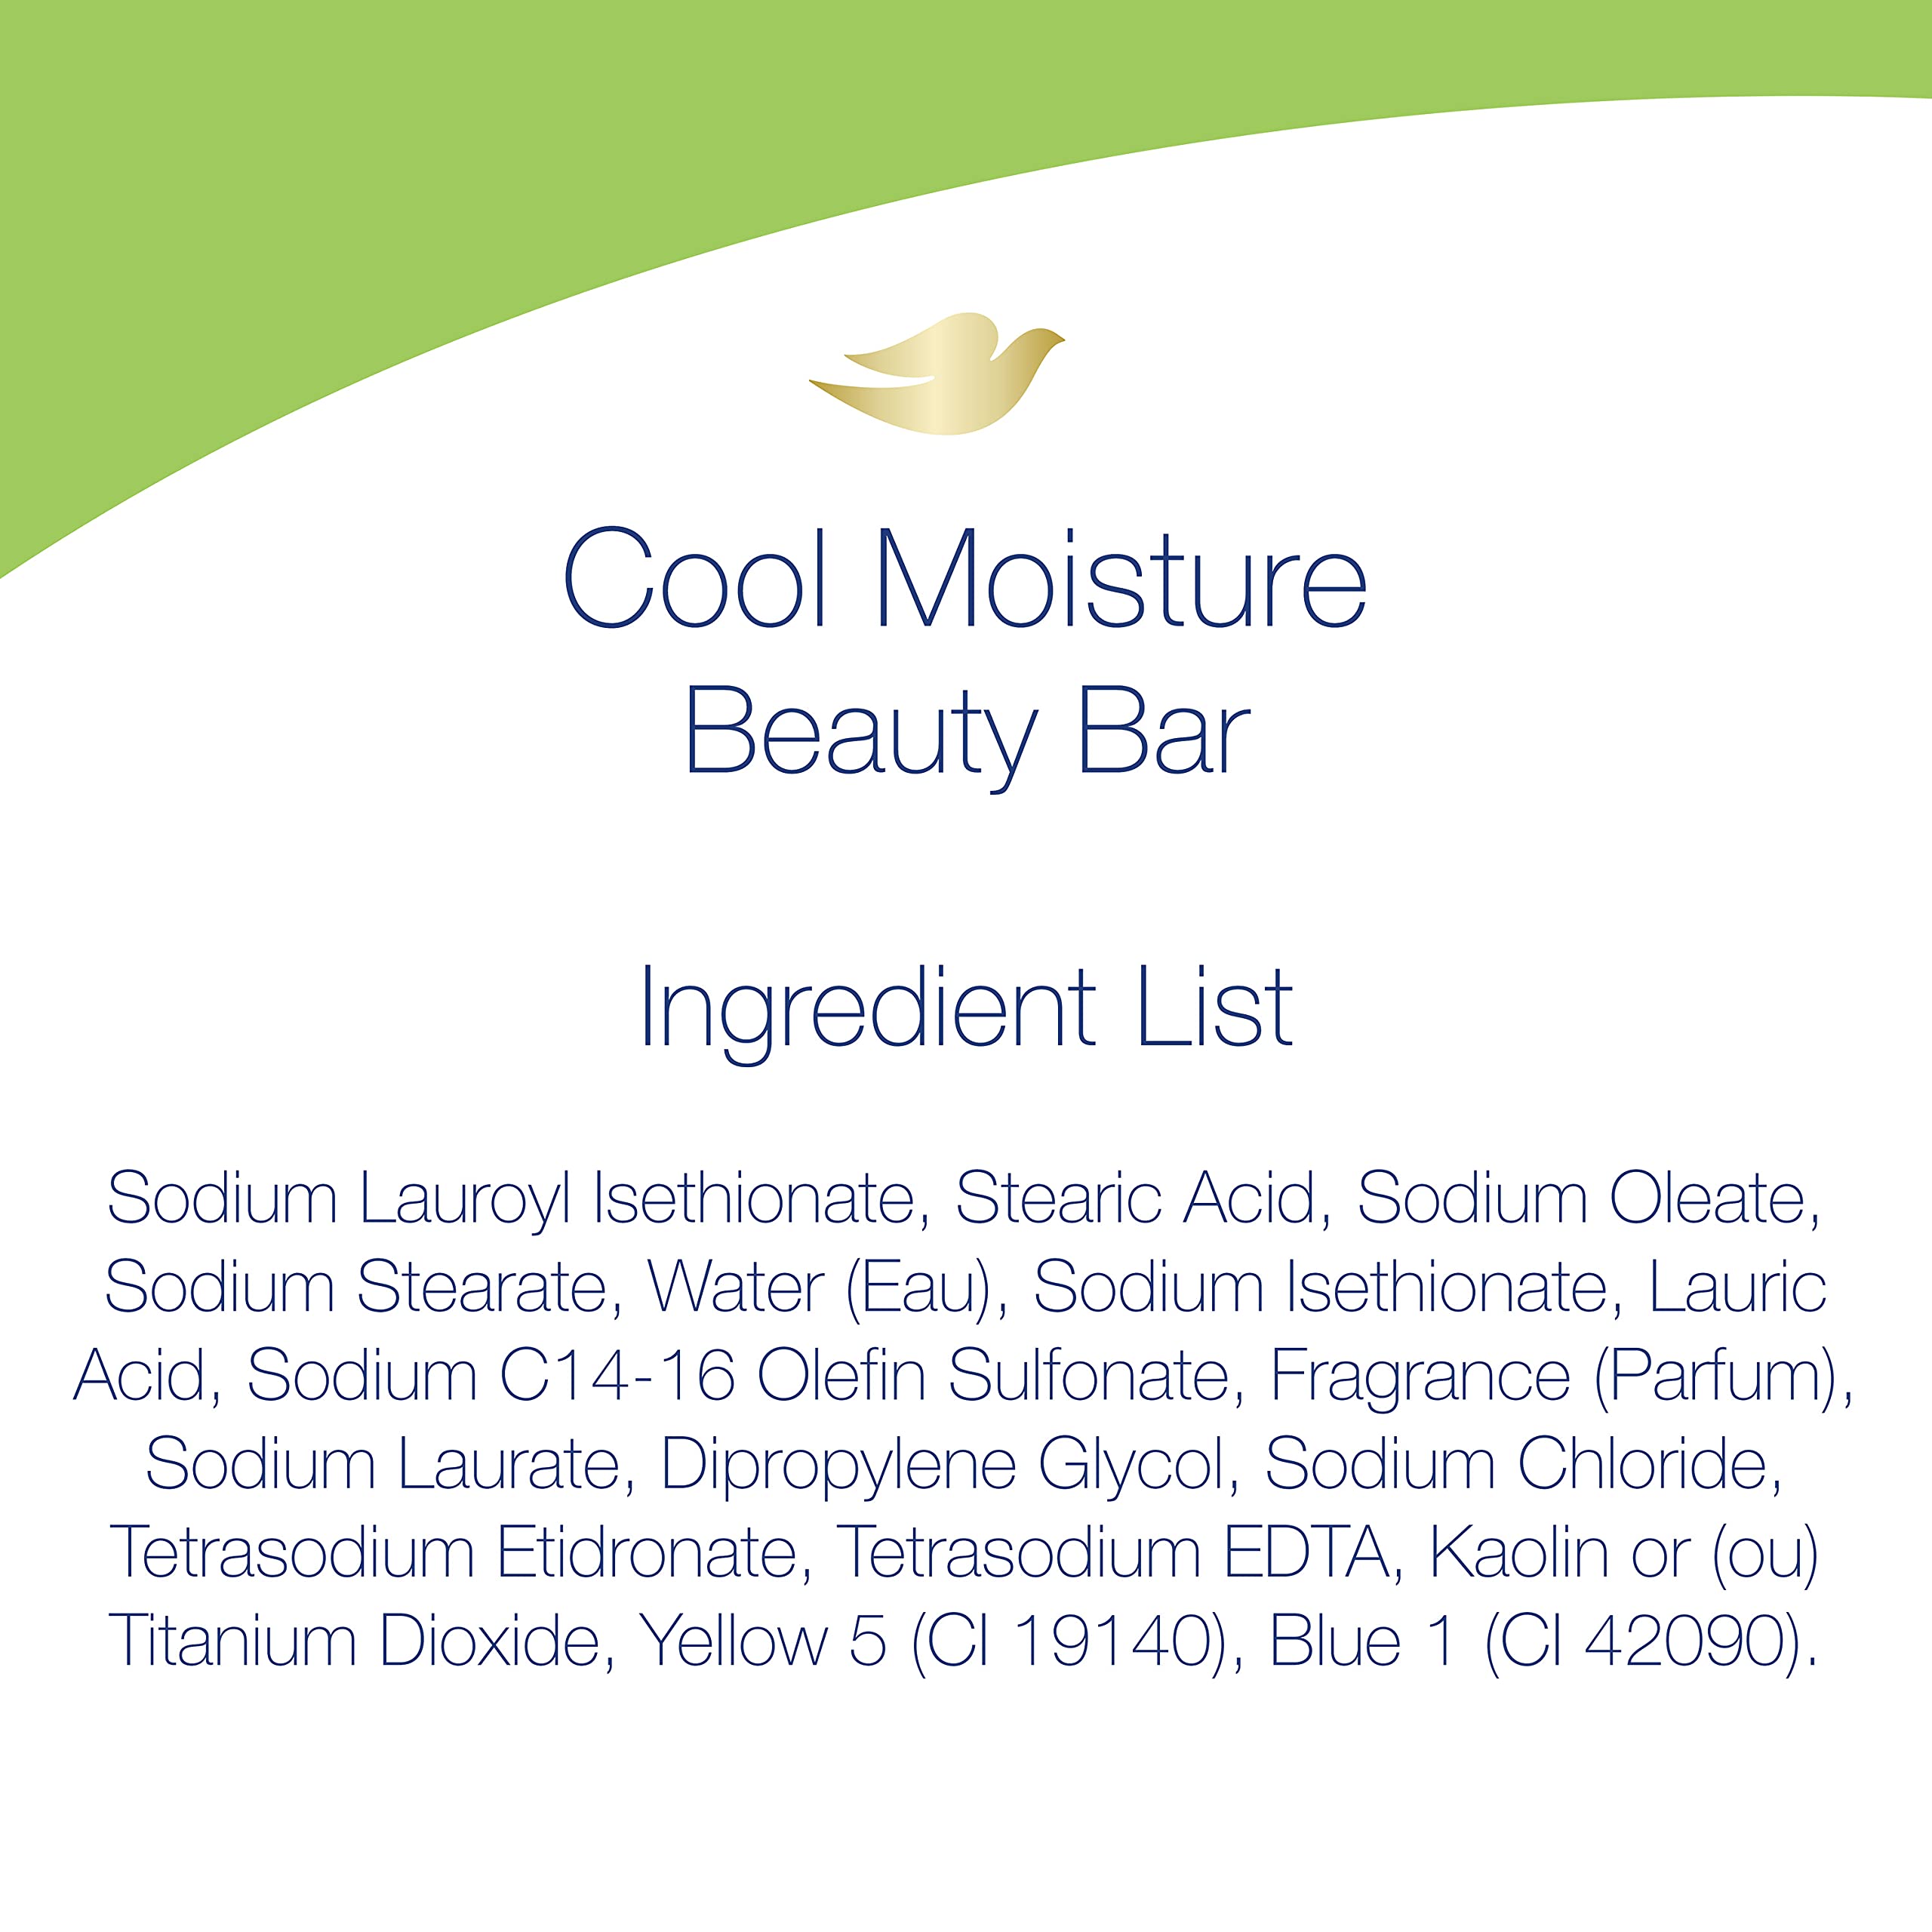 Dove Skin Care Beauty Bar For Softer Skin Cucumber And Green Tea More Moisturizing Than Bar Soap 3.75 oz 24 bars